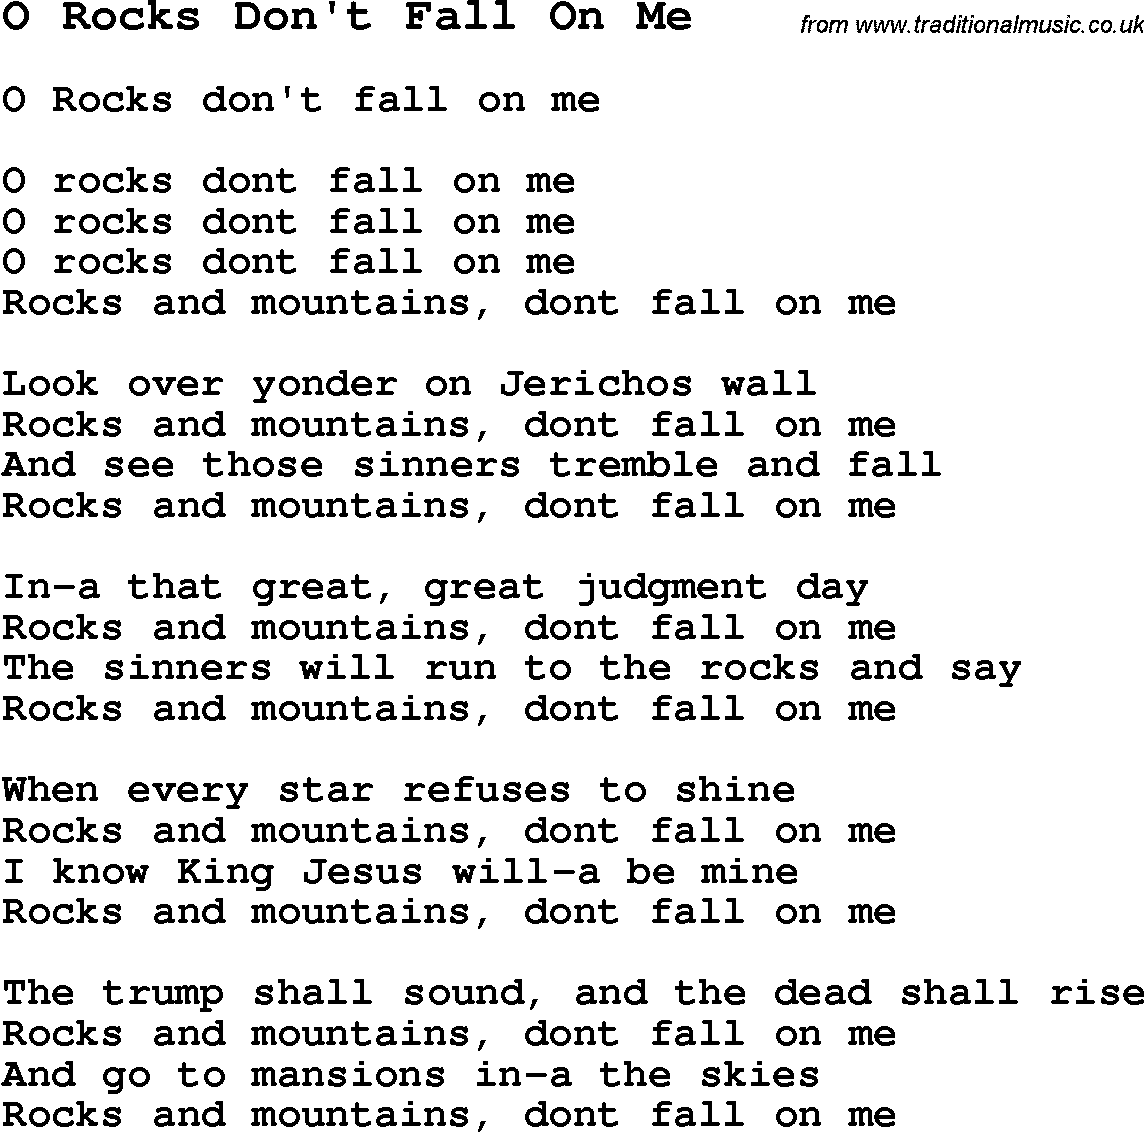 Negro Spiritual Song Lyrics for O Rocks Don't Fall On Me